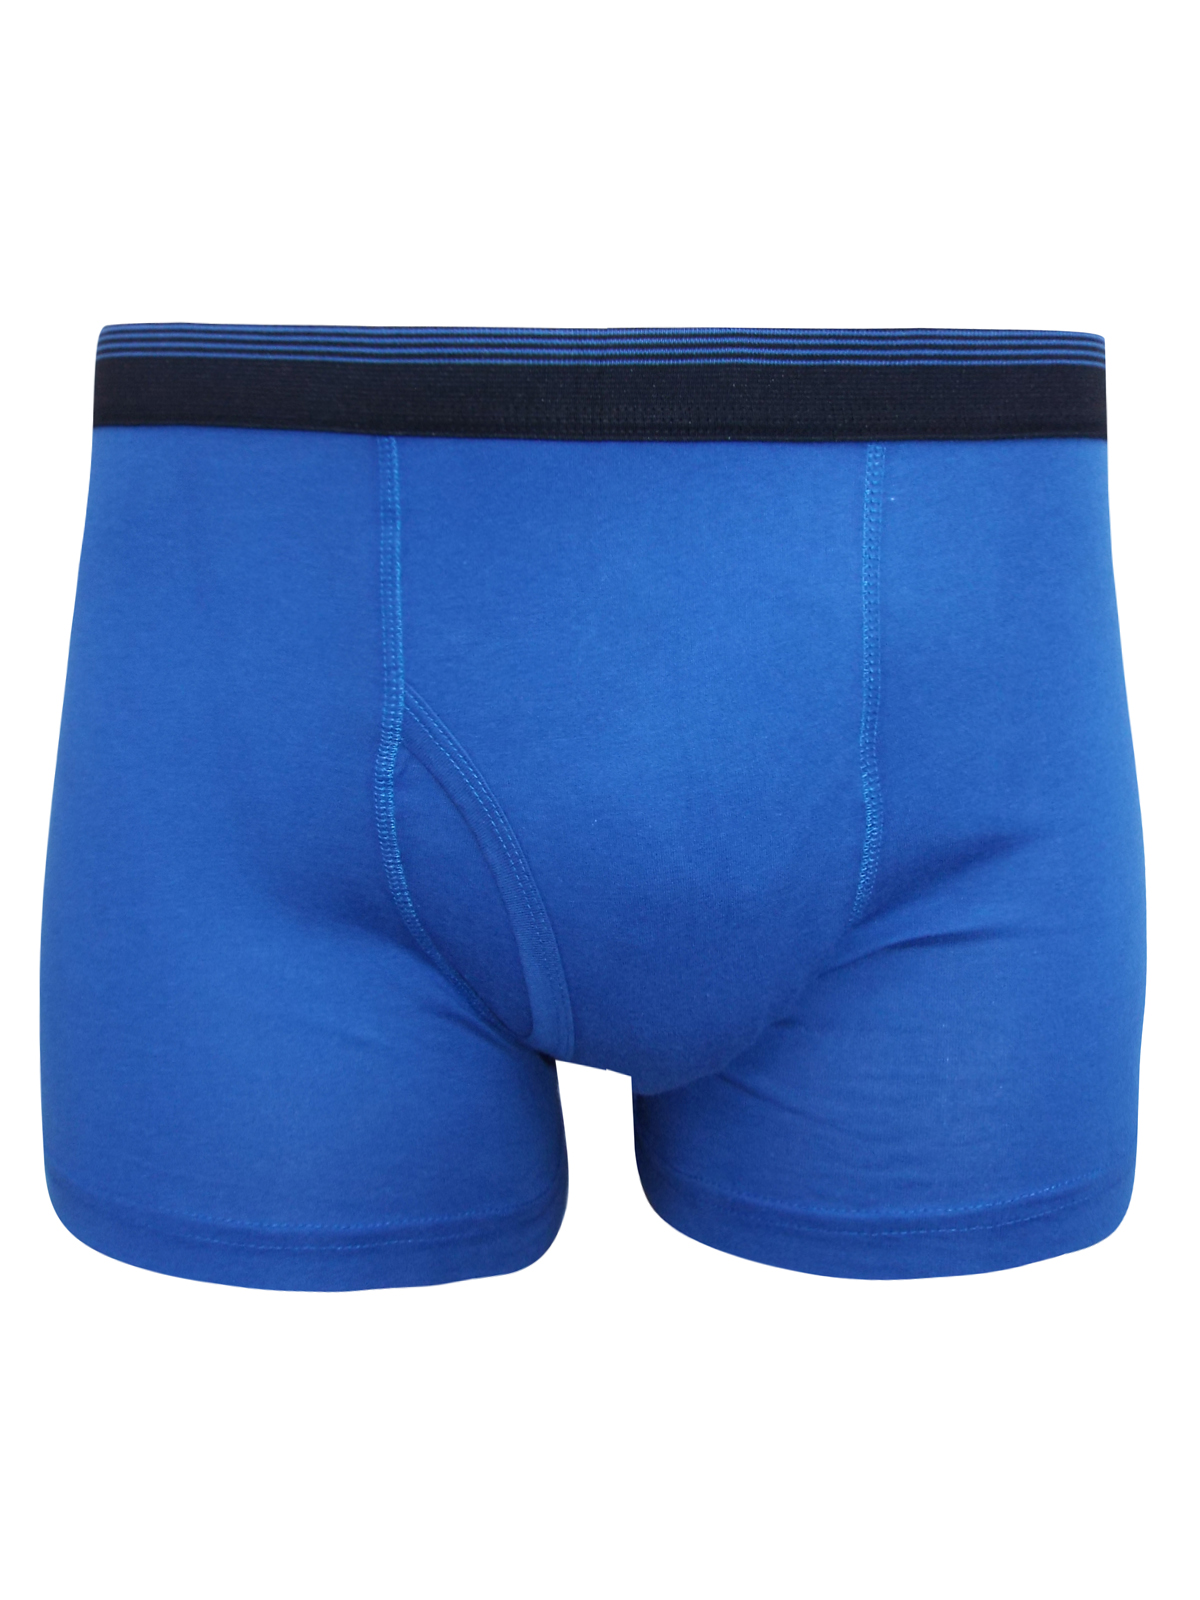 Debenhams - - D3benhams BLUE Cotton Rich Stripe Waist Boxers - Size ...